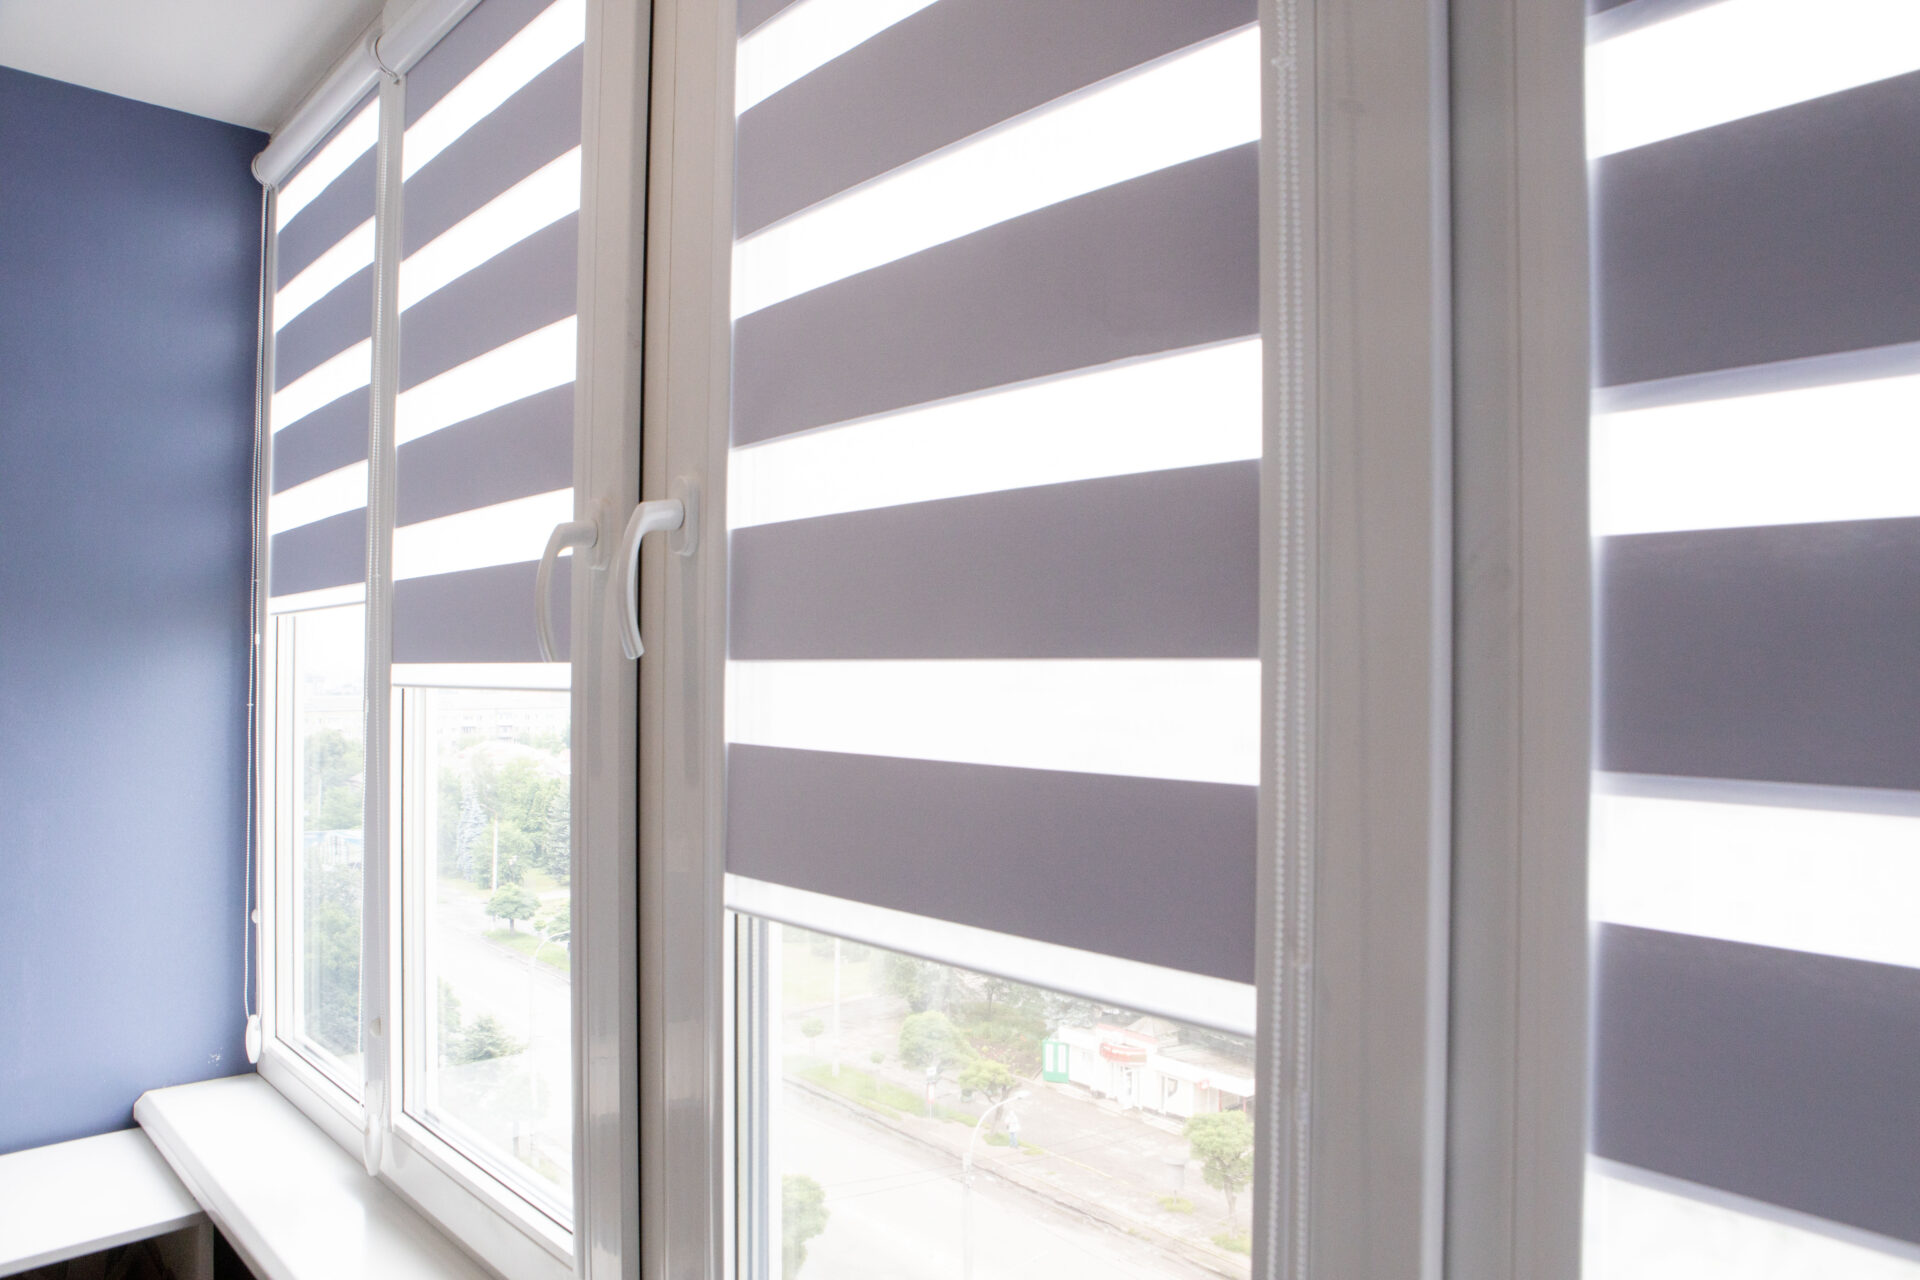 Office window shades. Zebra shades for lighting range control. Wholesale Blind Factory